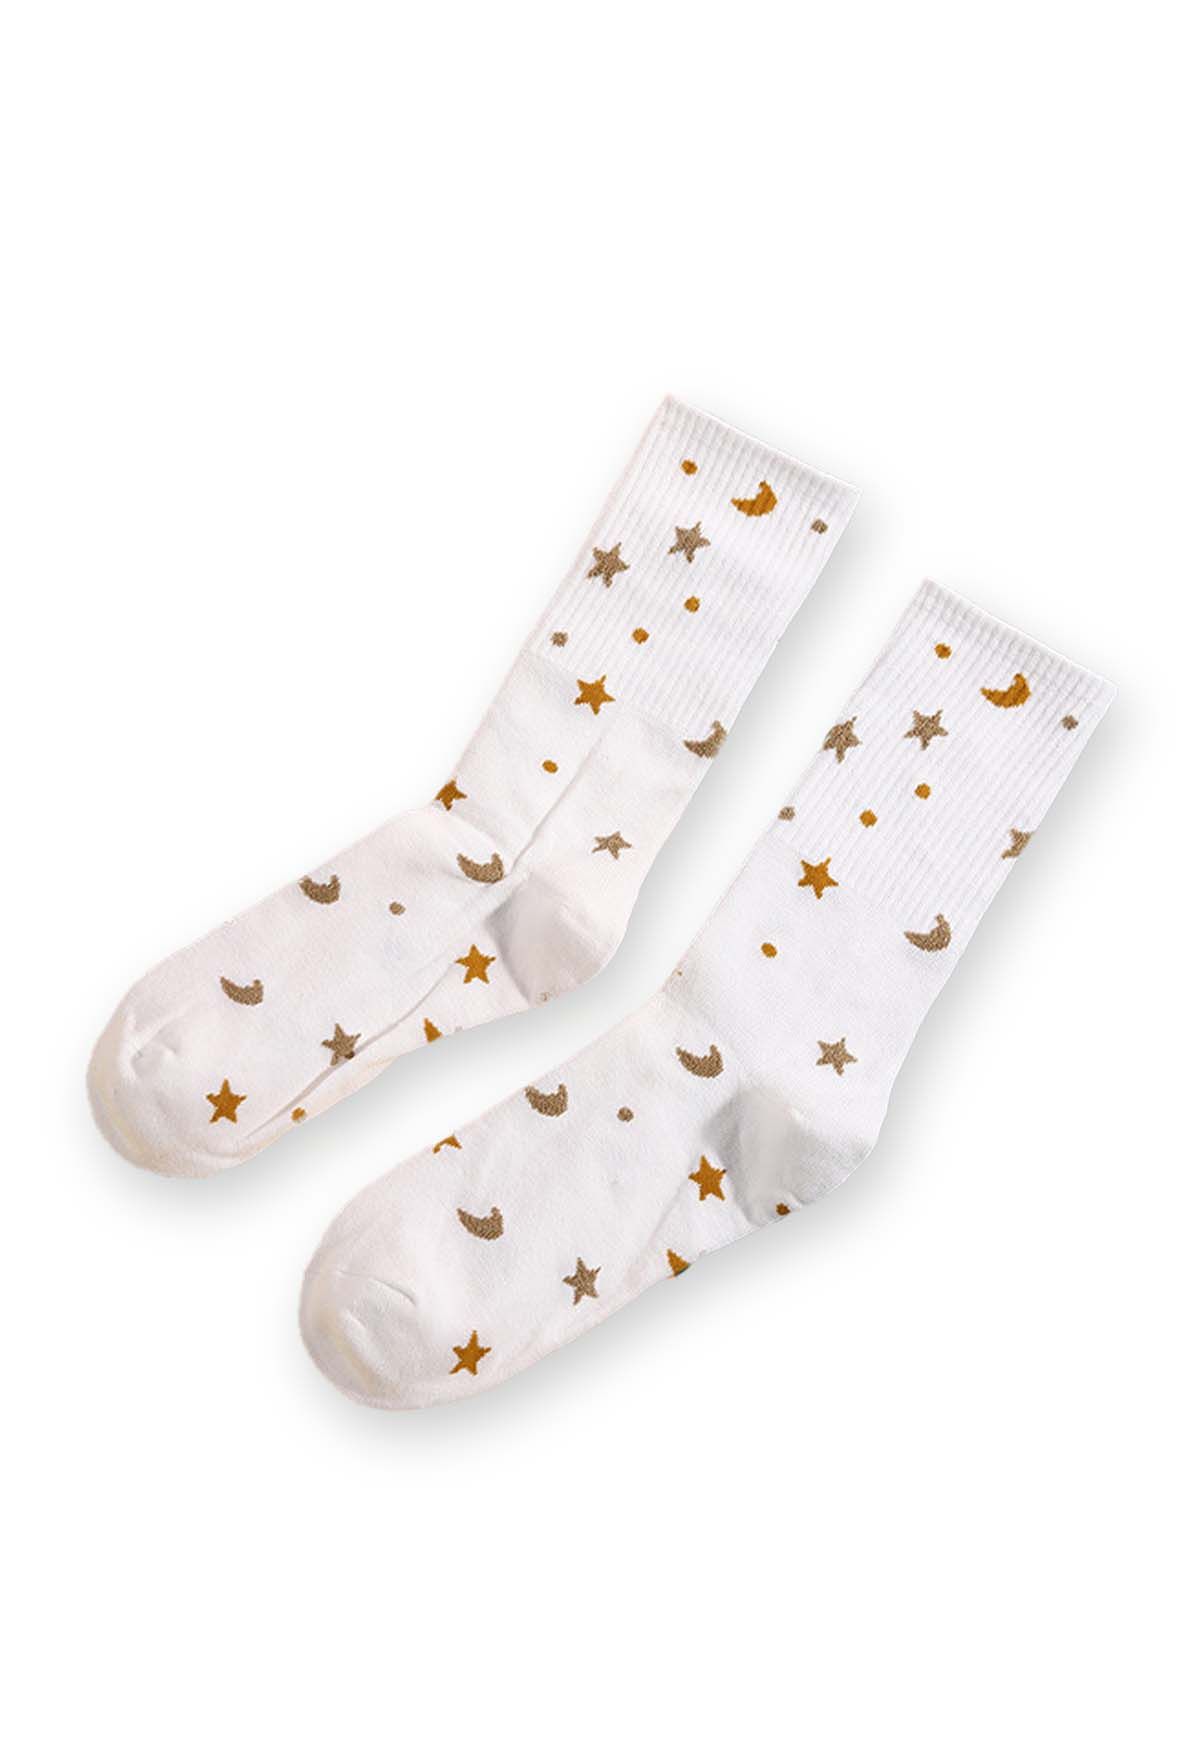 5 Pairs Moon and Star Pattern Crew Socks